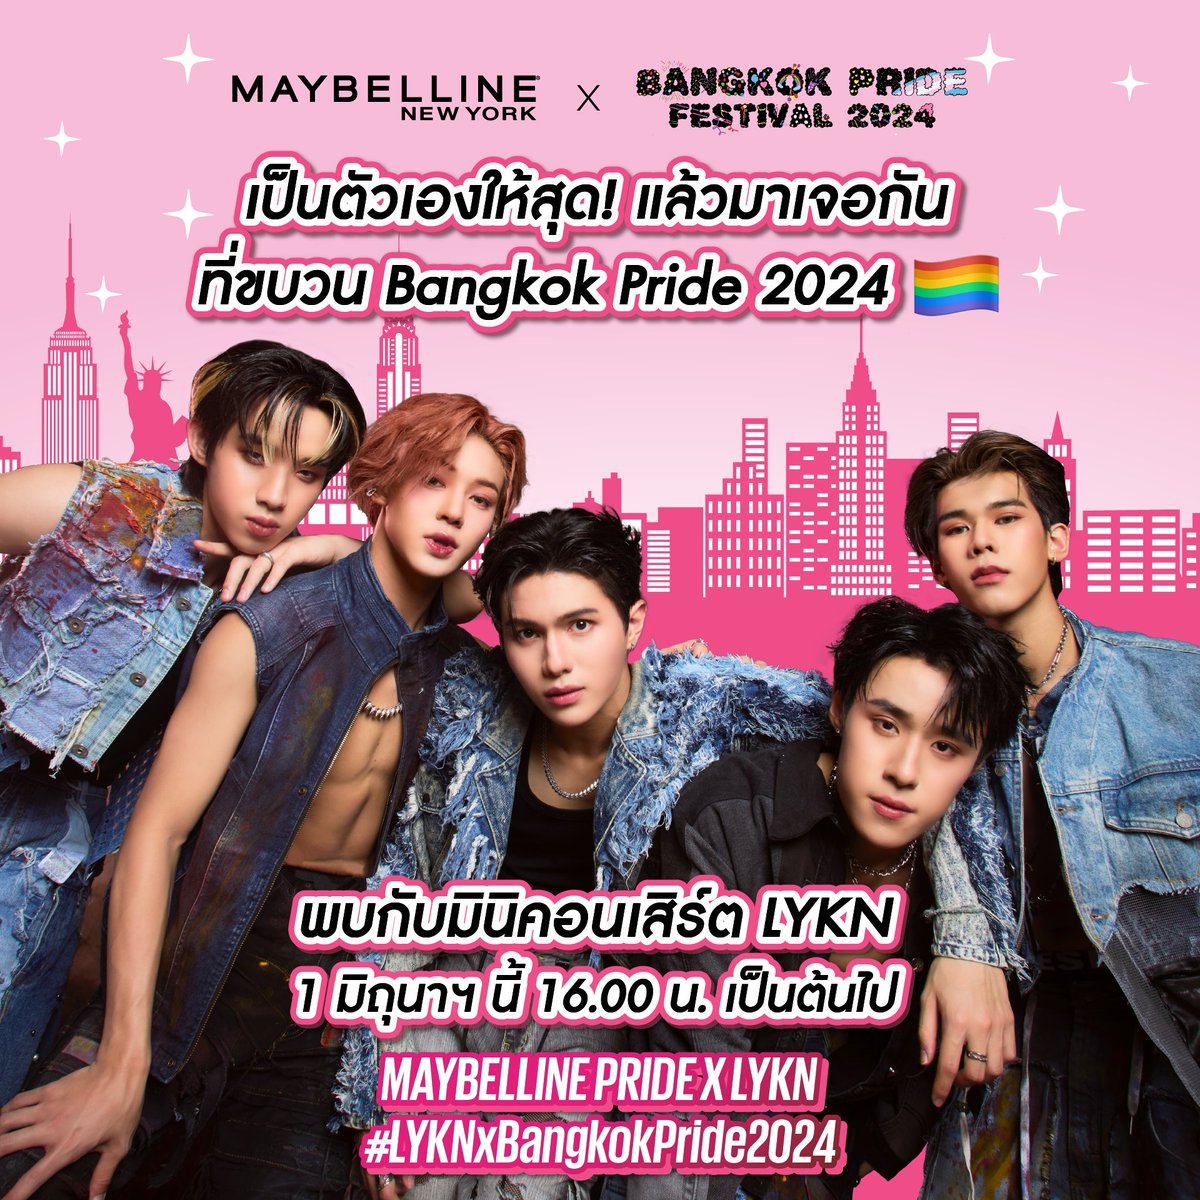 MAYBELLINE NEW YORK x Bangkok Pride Parade 2024 🏳️‍🌈 💗ขอเชิญทุกคนเข้าร่วมขบวนที่ 2 ตัวตน Love for Identity พร้อมพบมินิคอนเสิร์ตจาก LYKN 🗓 วันที่ 1 มิ.ย. 67 16:00 น. เป็นต้นไป ✨พร้อมมุ่งหน้าสู่ Maybelline Stage บริเวณGroove @ CTW #LYKN #BangkokPride2024 #MaybellinePride2024